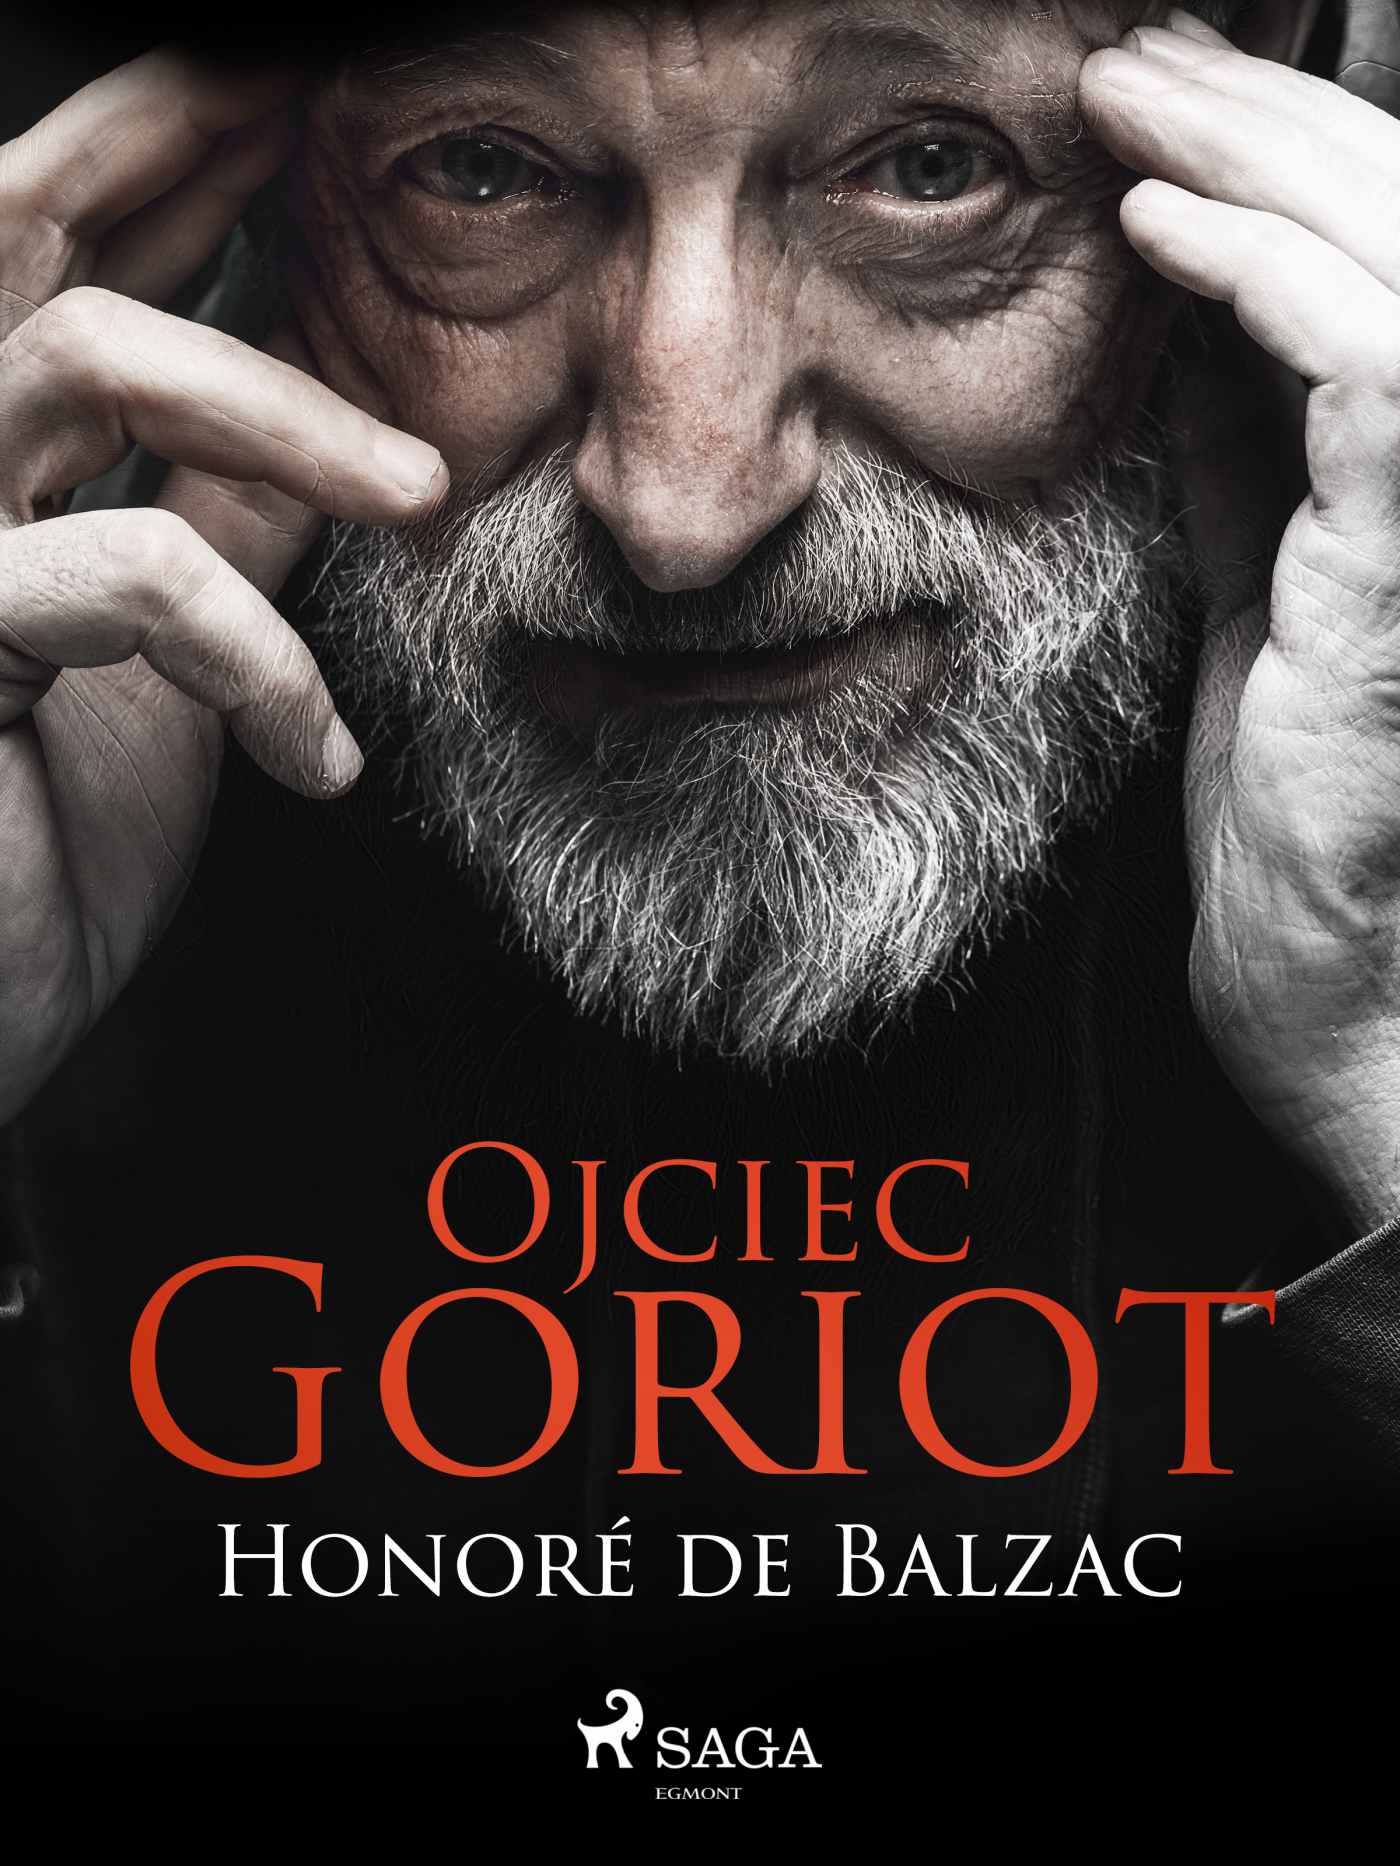 Книга отец горио. Father Goriot by Balzac. Бальзак о. "отец Горио". Отец Горио фото.